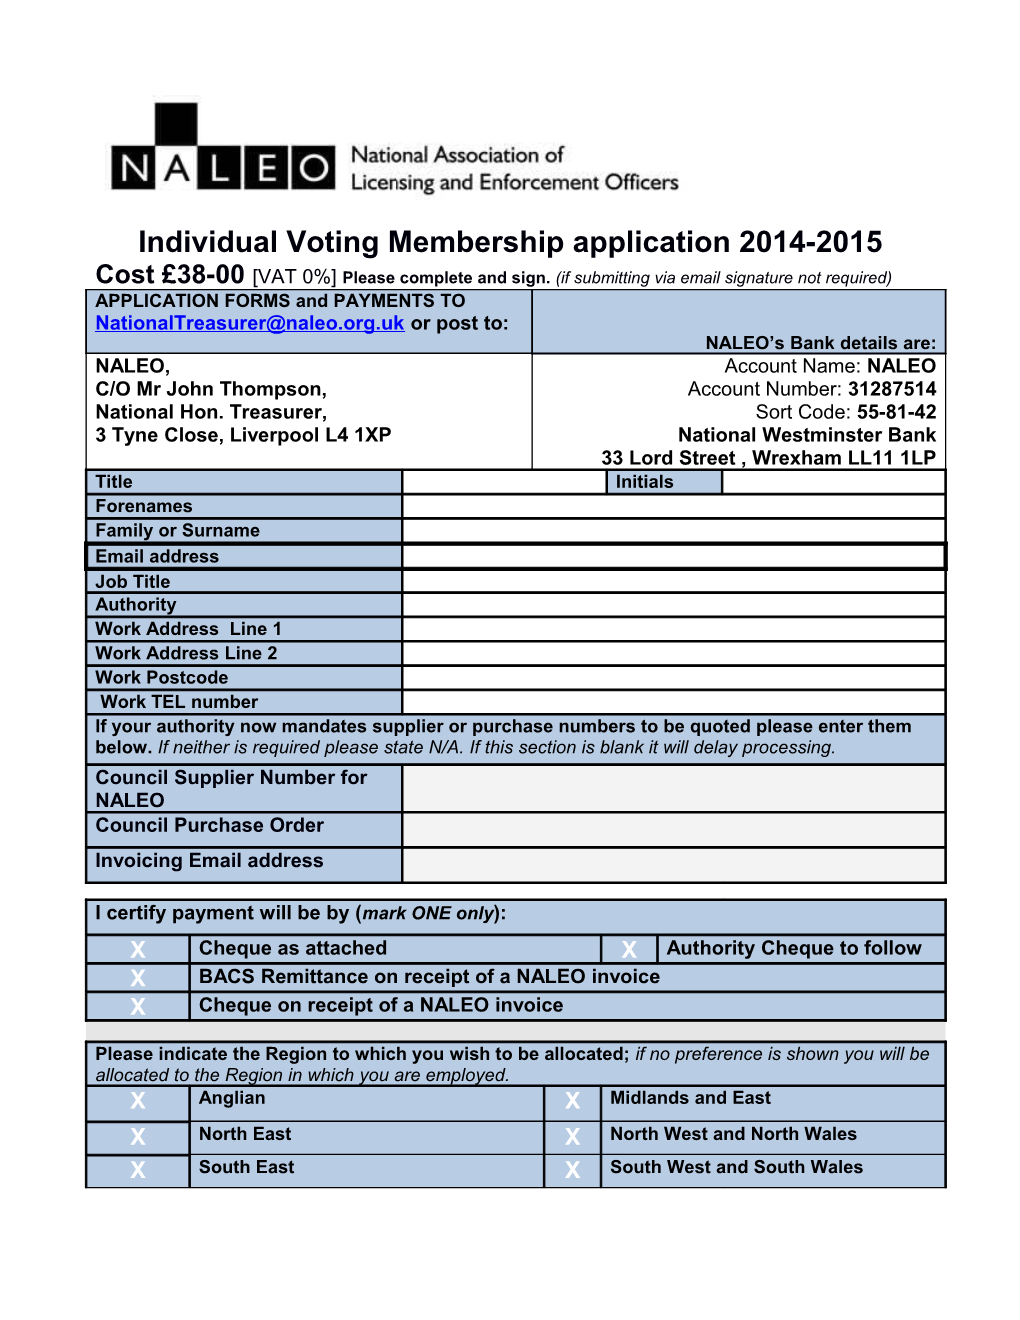 Individual Voting Membership Application 2014-2015